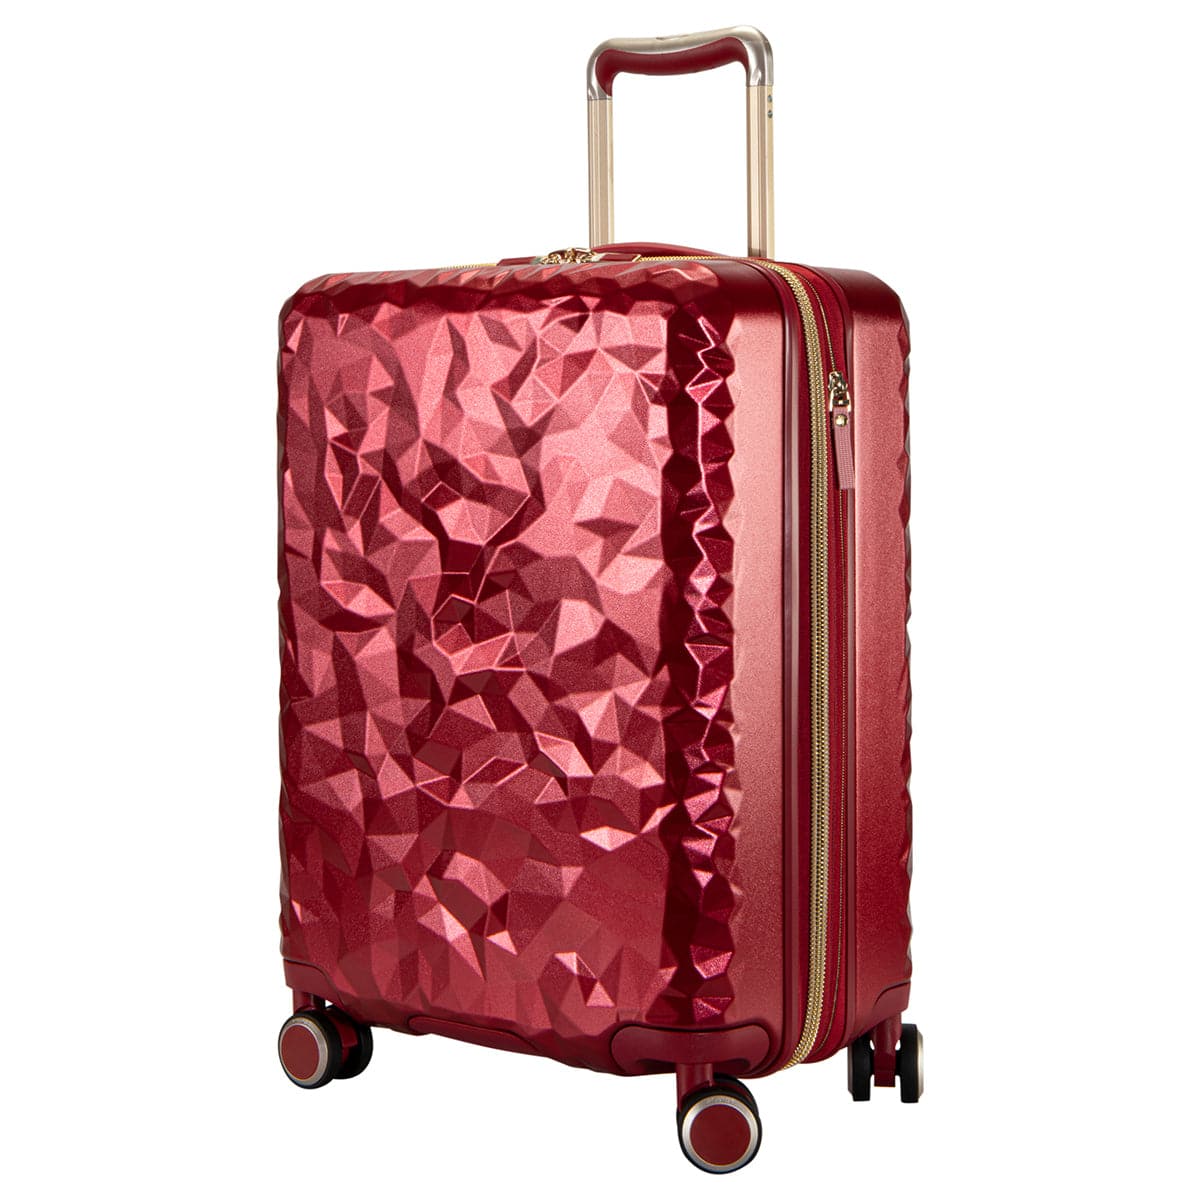 Ricardo Beverly Hills Indio Carry-On Suitcase Luggage